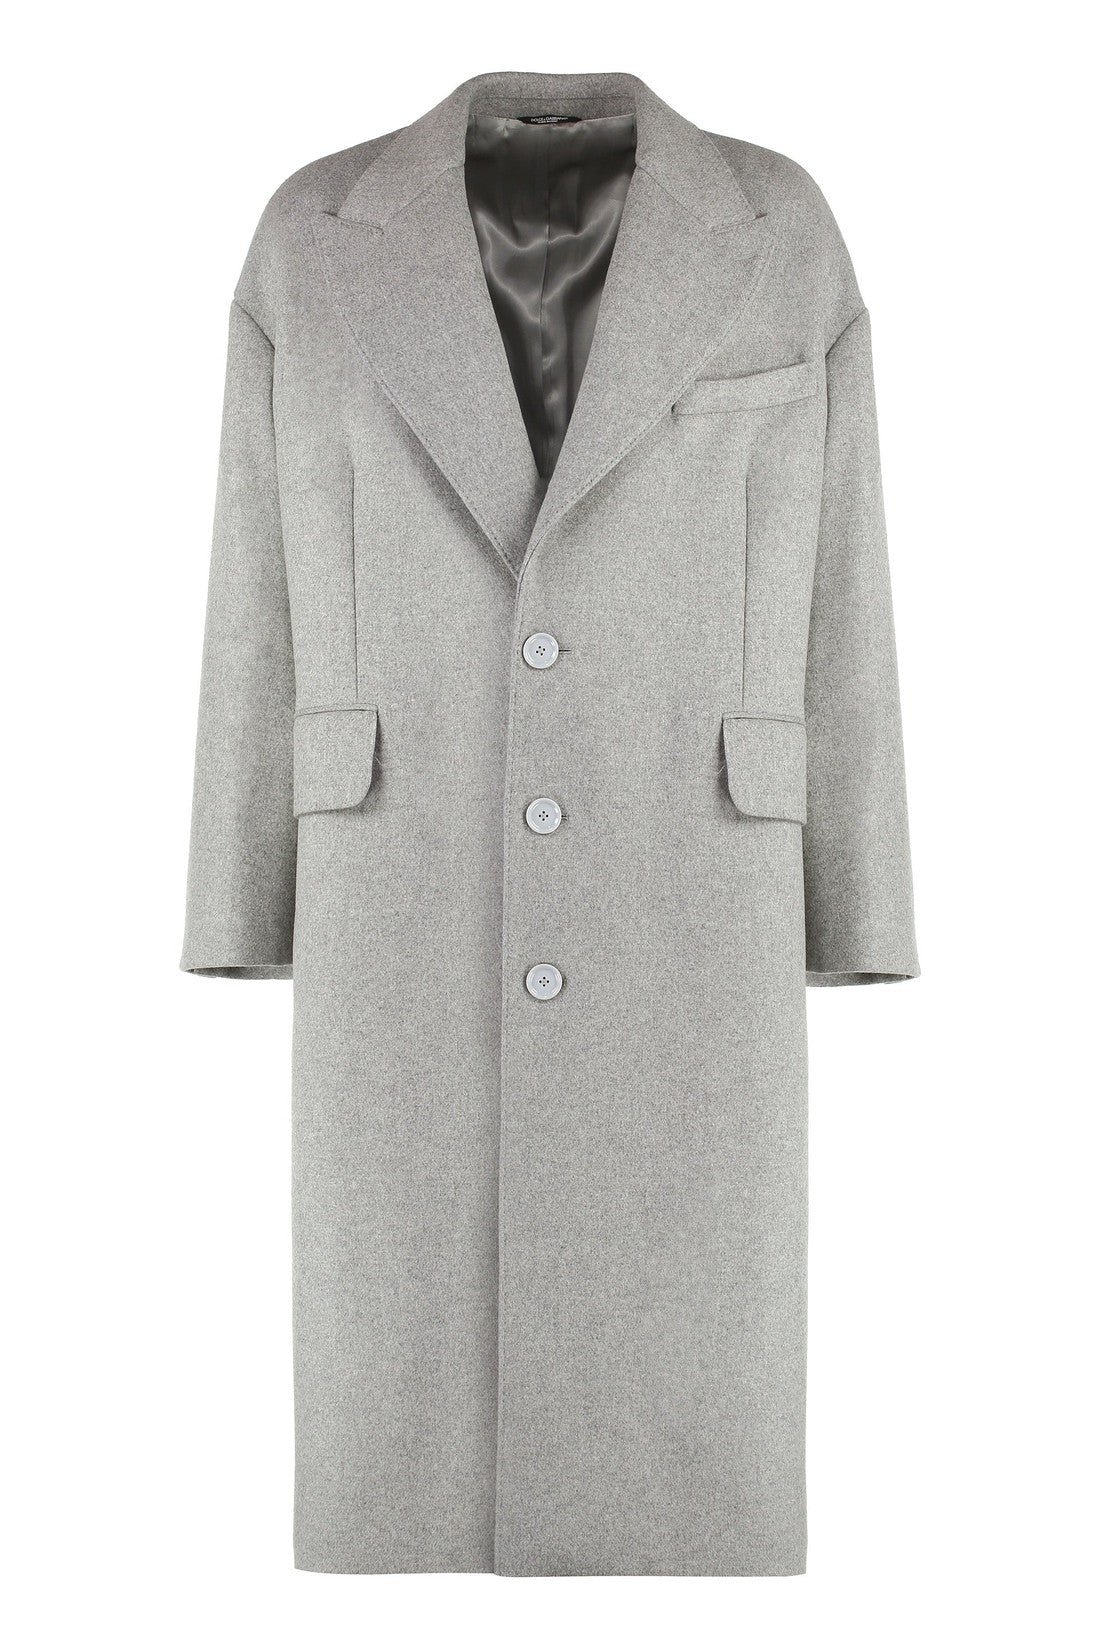 Dolce & Gabbana-OUTLET-SALE-Wool blend coat-ARCHIVIST